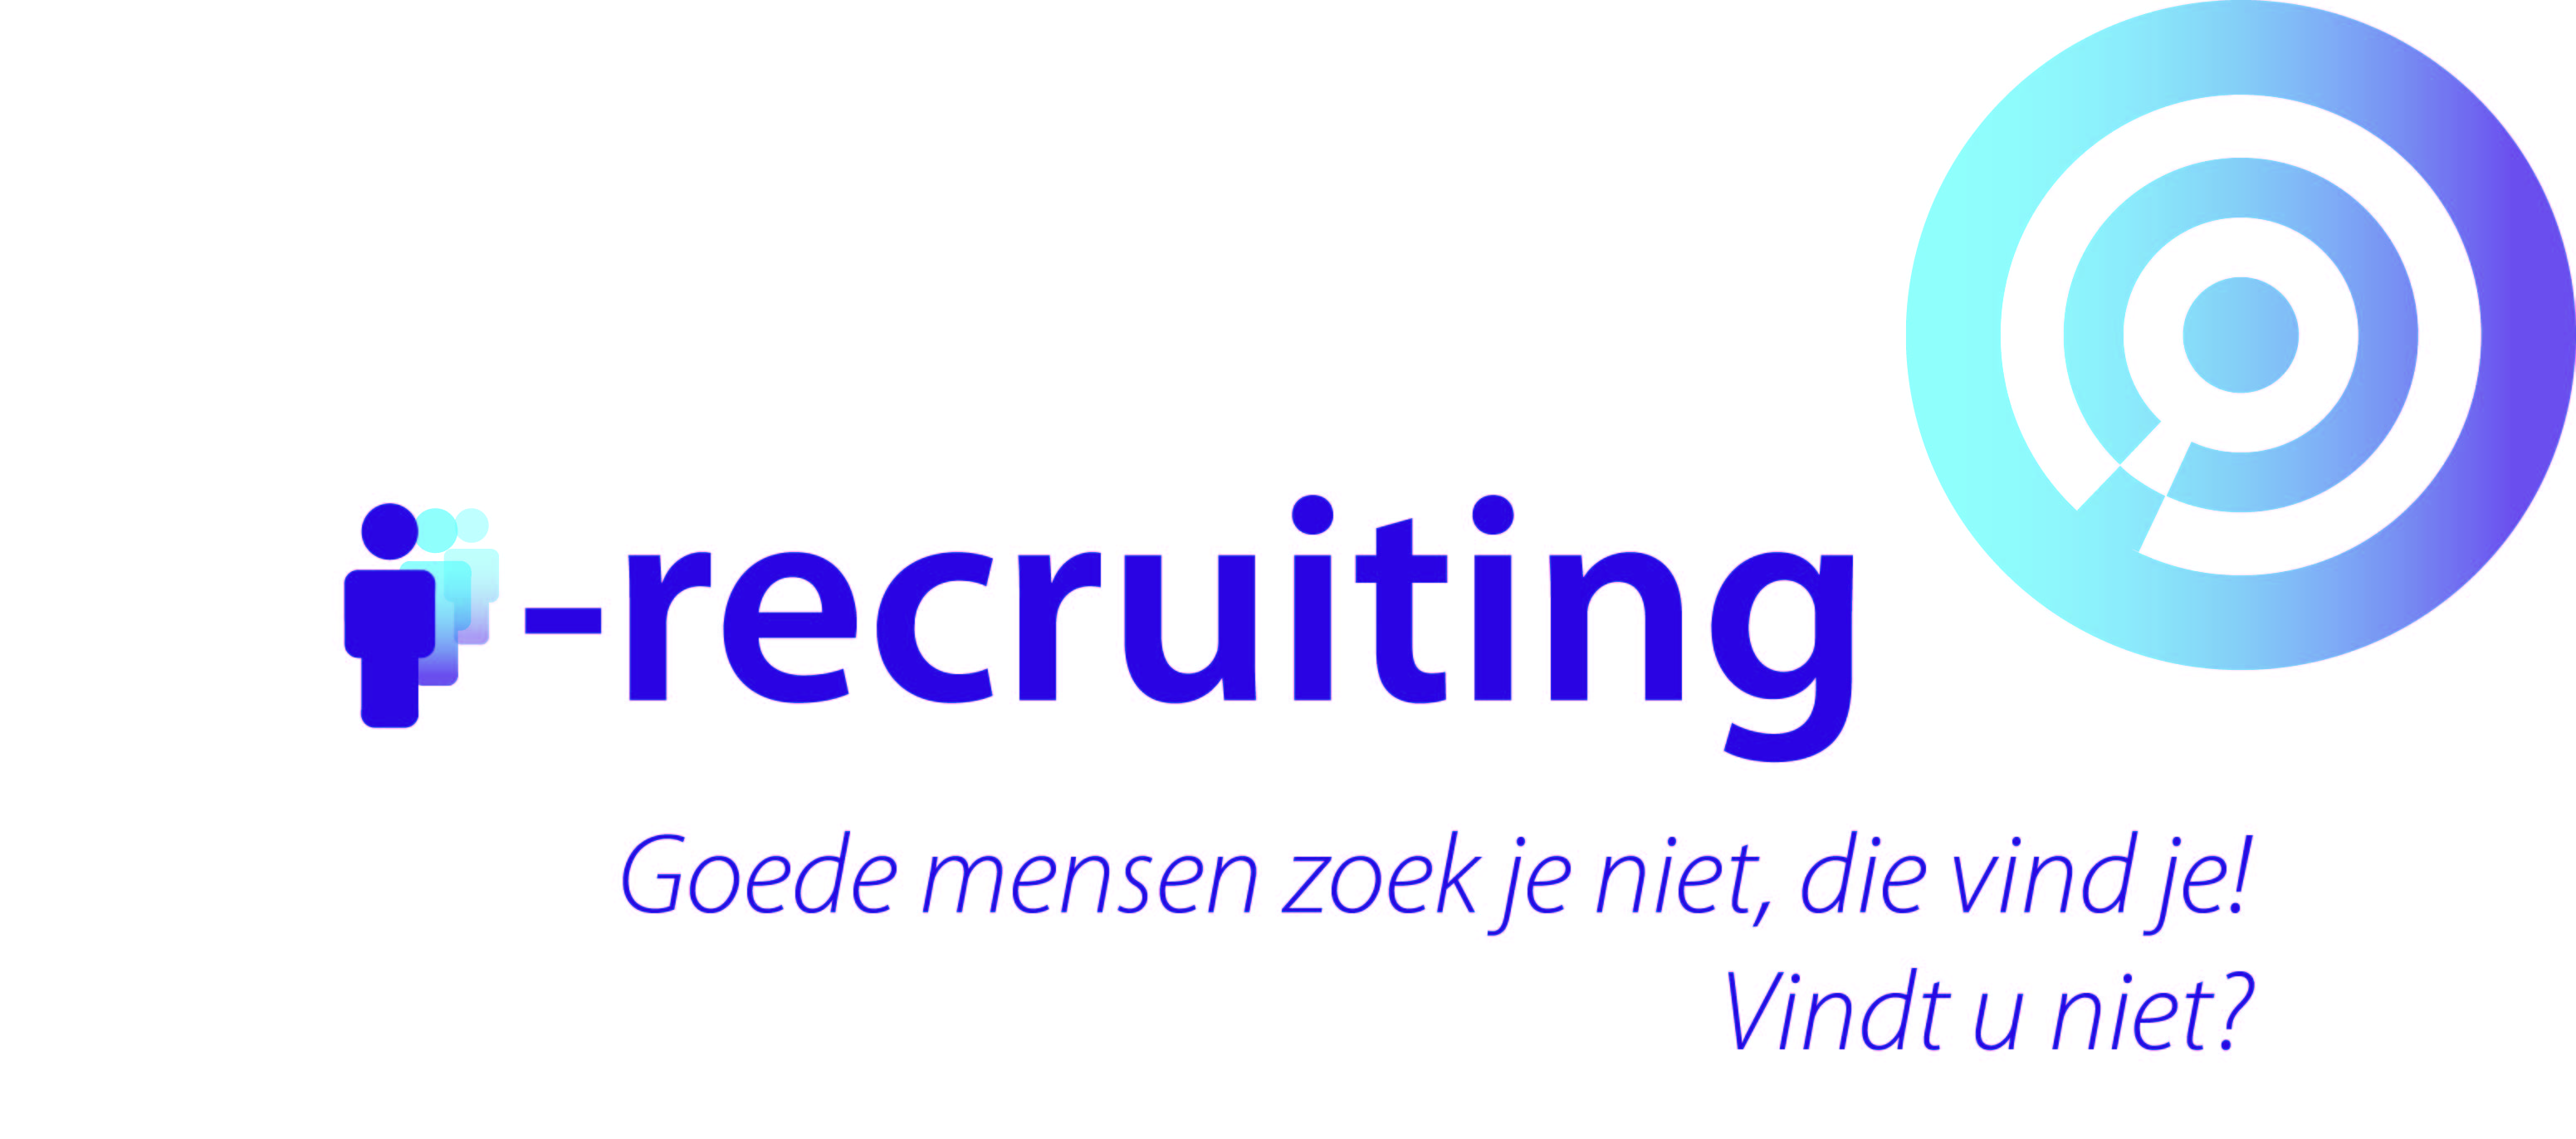 I-recruiting BV logo